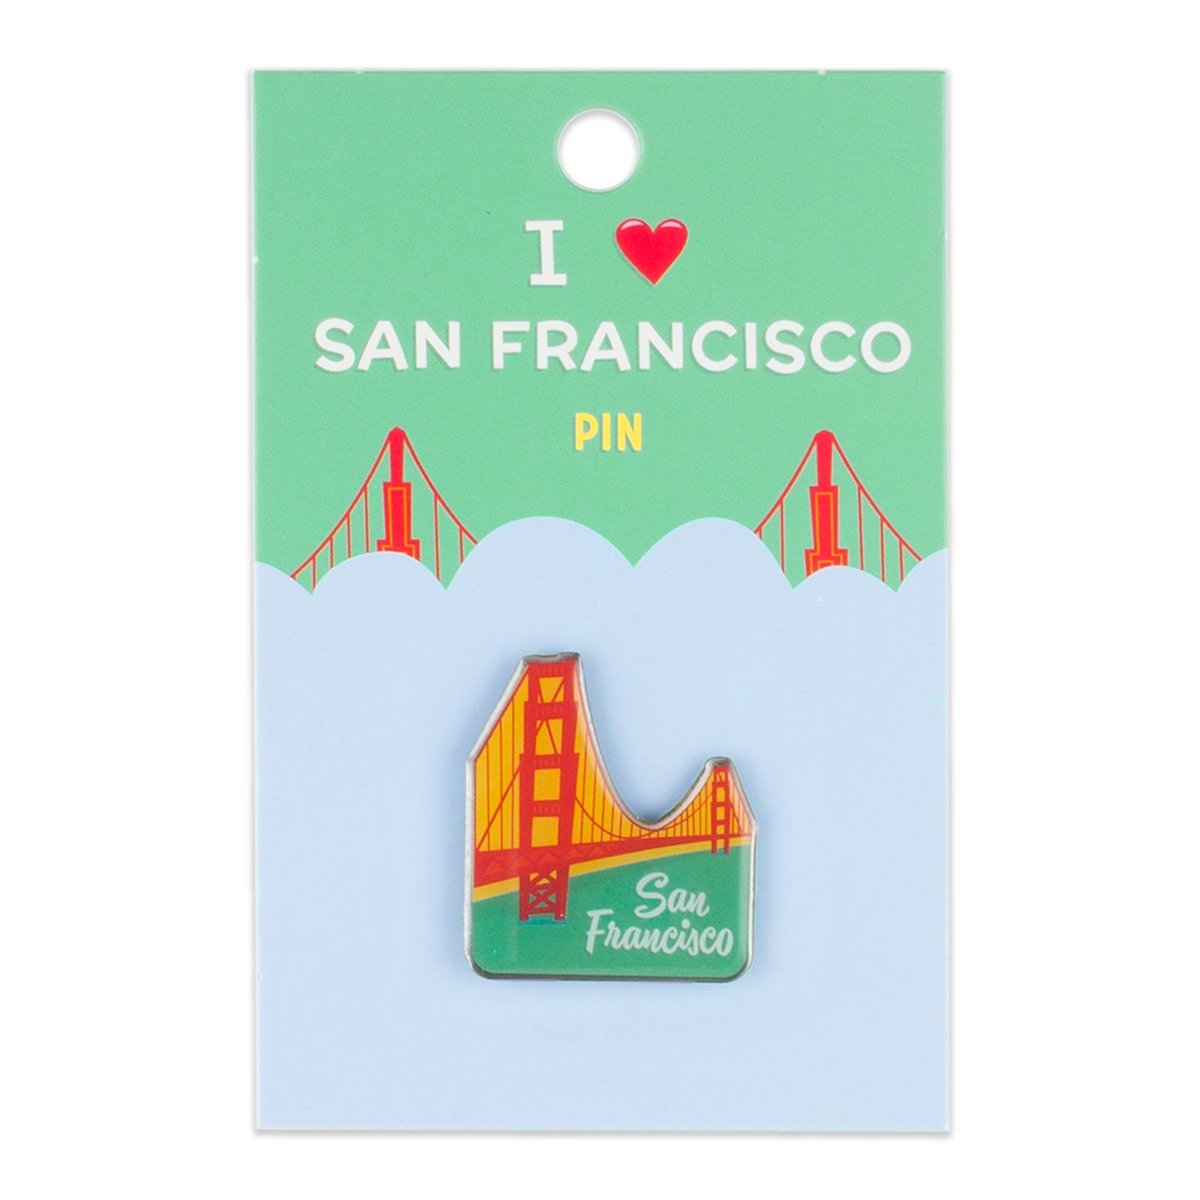 I Heart San Francisco Golden Gate Bridge pin, featuring vintage-inspired teal, yellow, and orange illustration of bridge.